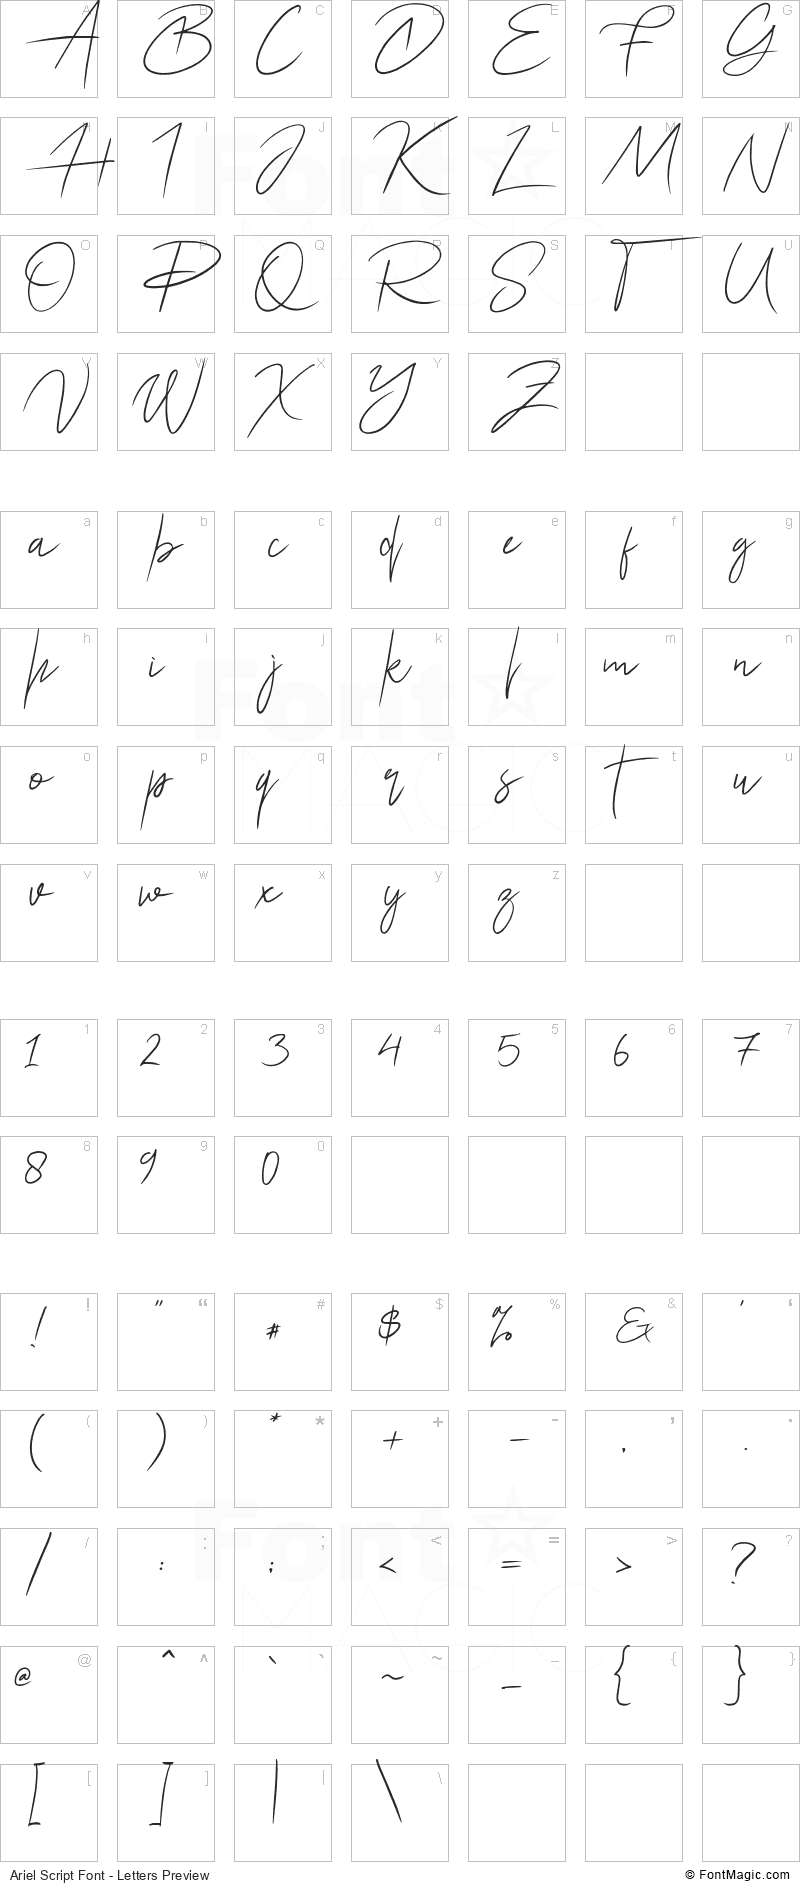 Ariel Script Font - All Latters Preview Chart